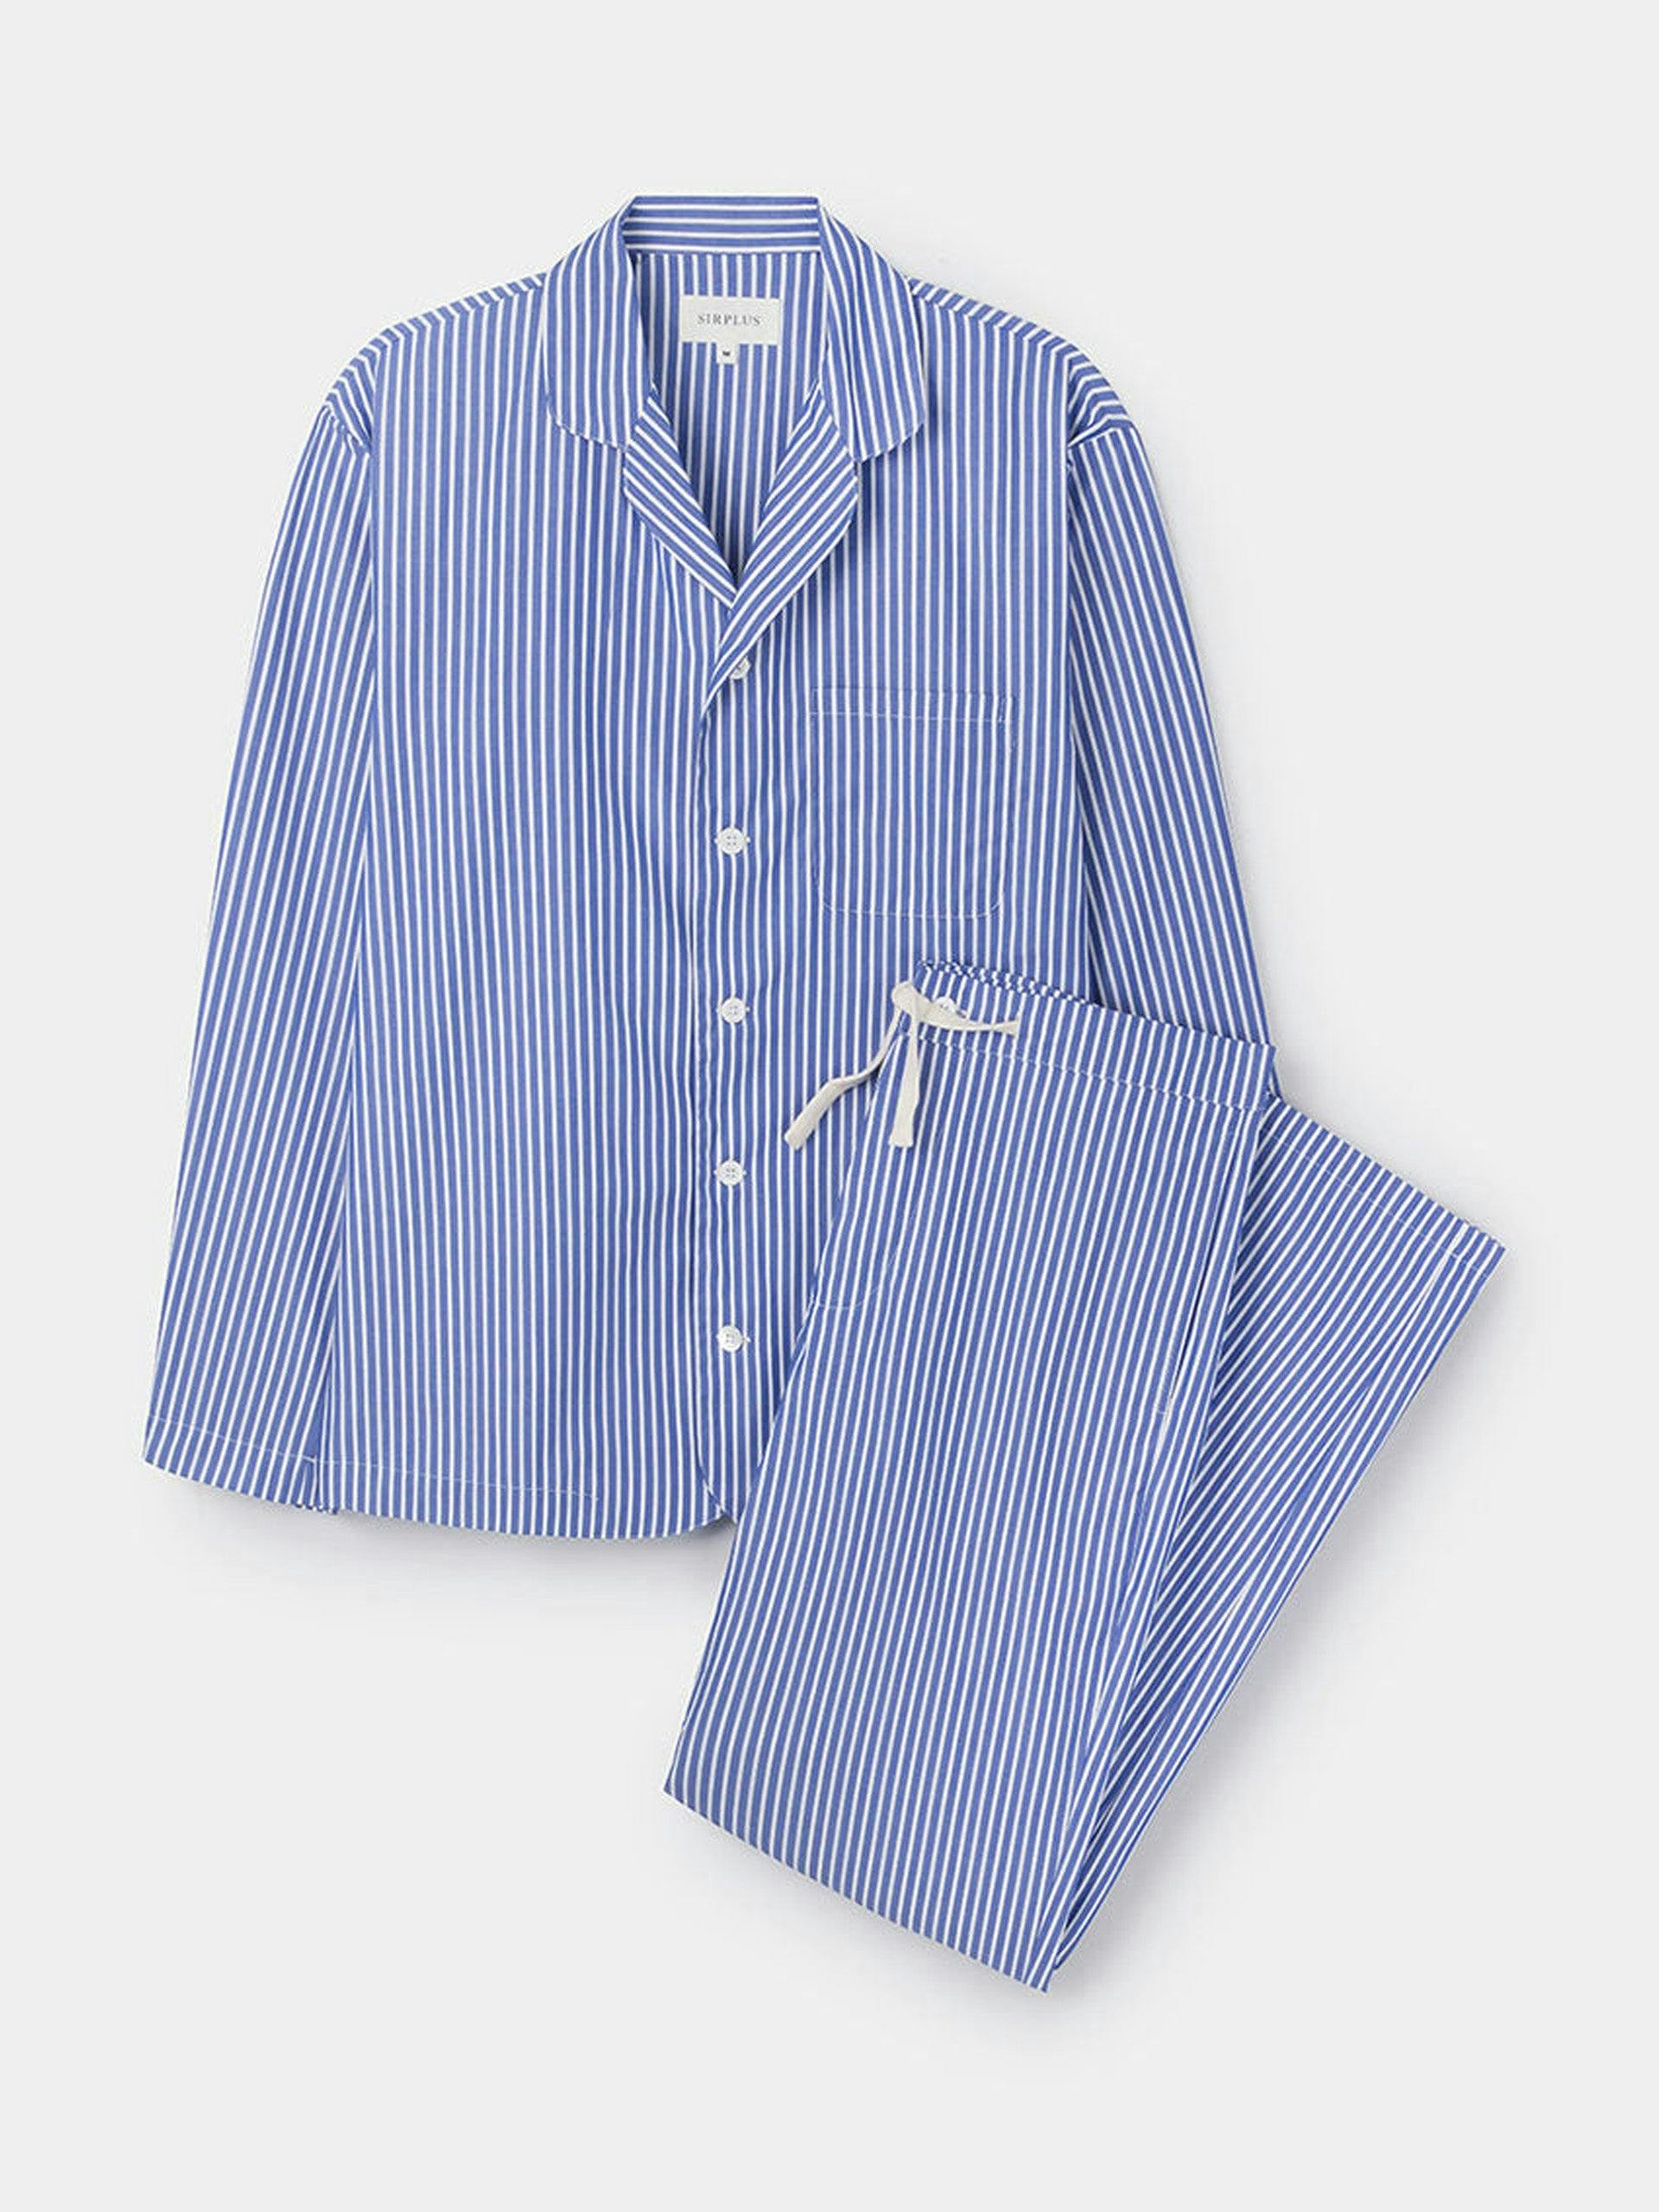 Blue and white striped cotton pyjamas